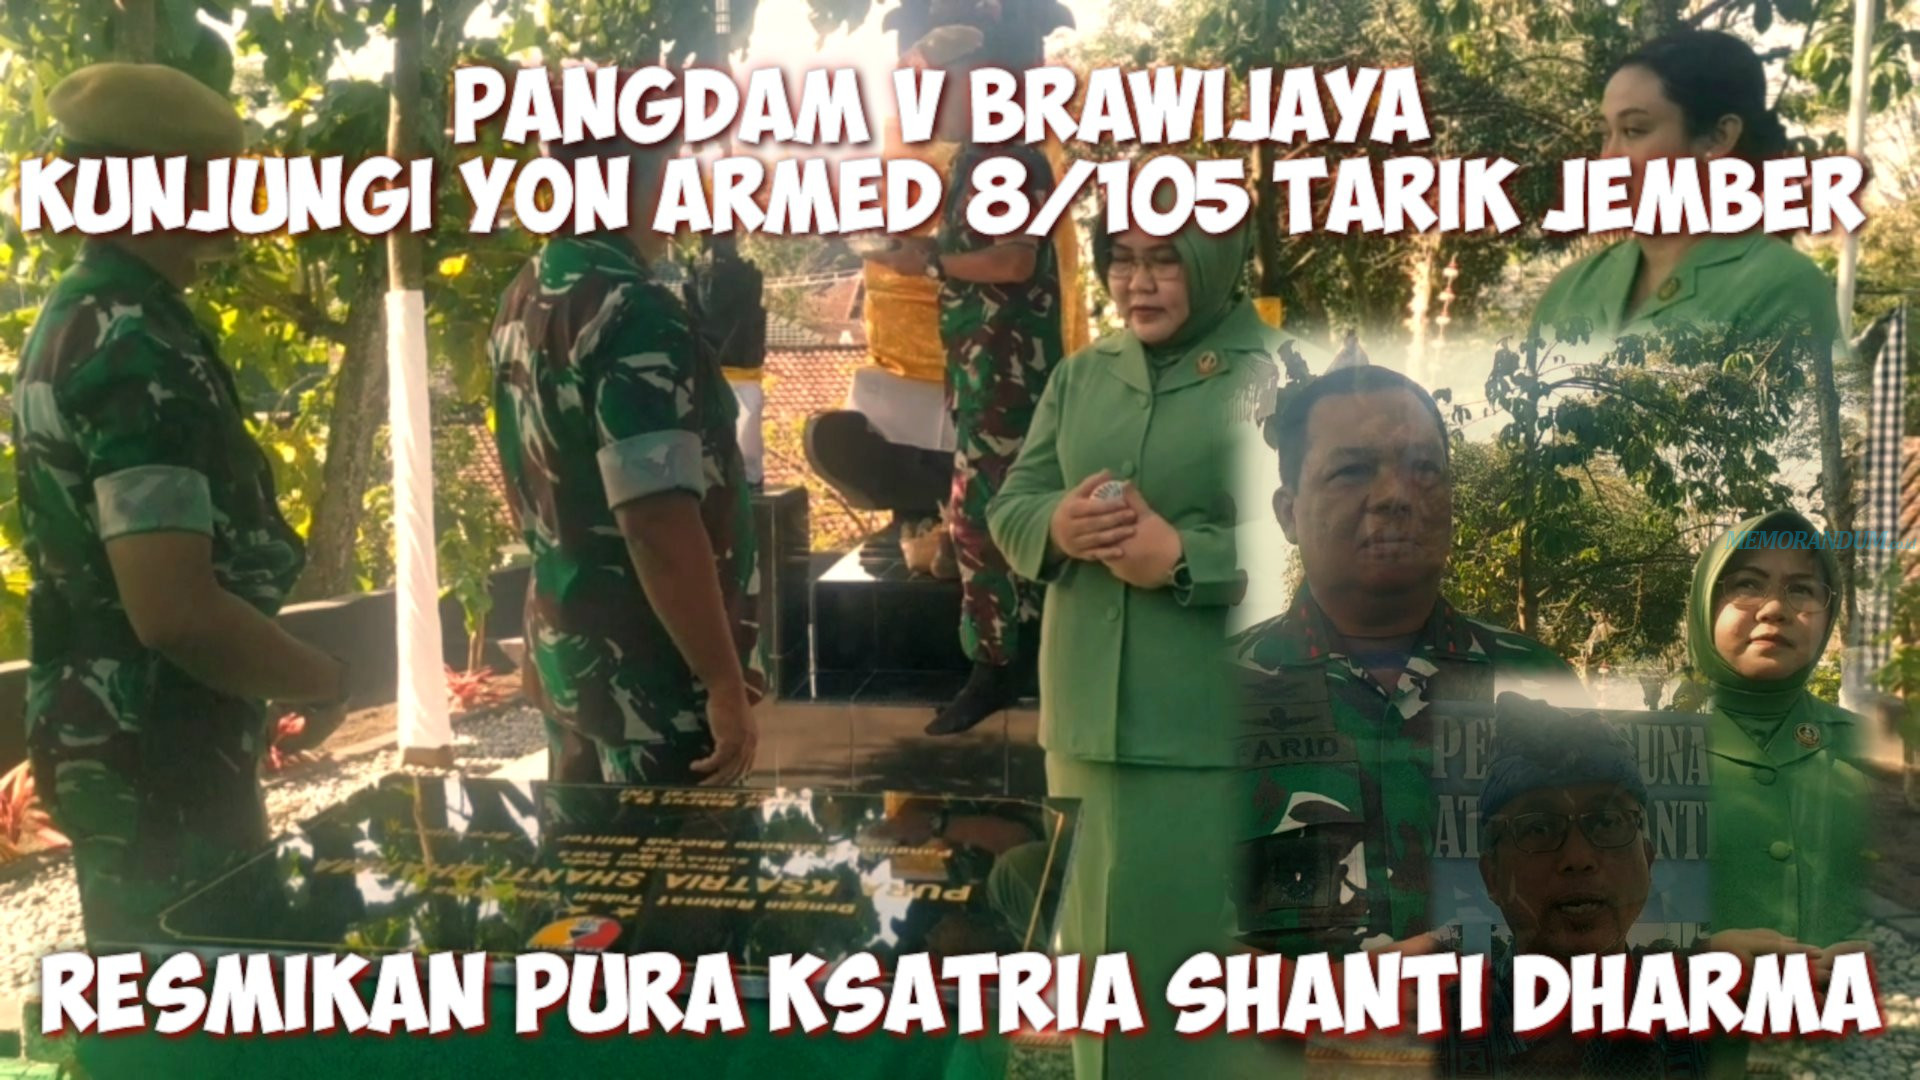 Video : Kunjungan Pangdam V Brawijaya di Yon Armed 8/105 Tarik Jember